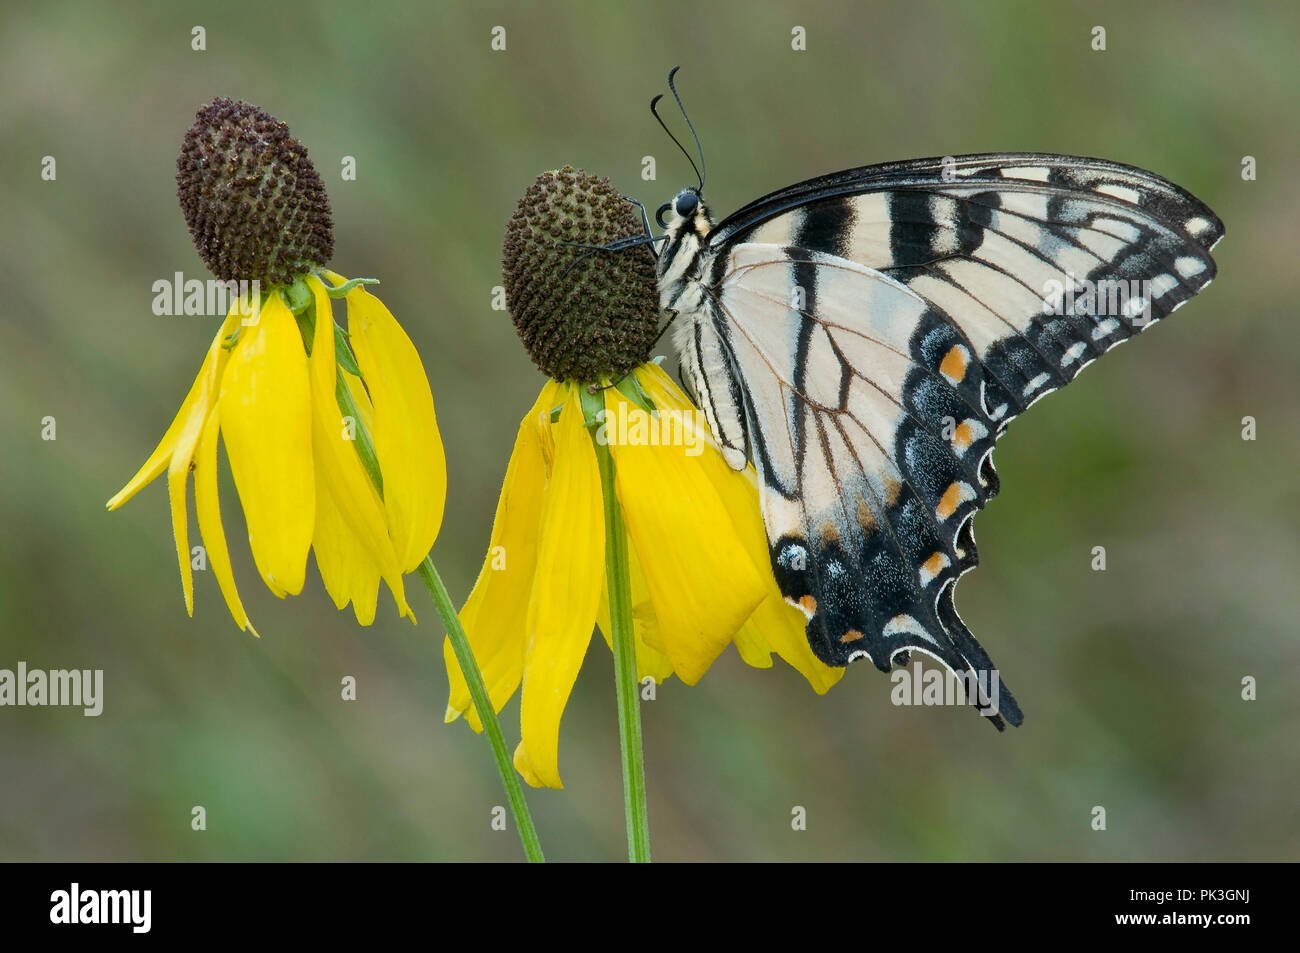 Eastern Tiger Swallowtail Butterfly (Papilio glaucus) auf Graue Coneflower (Ratibida pinnata), E USA, durch Überspringen Moody/Dembinsky Foto Assoc Stockfoto